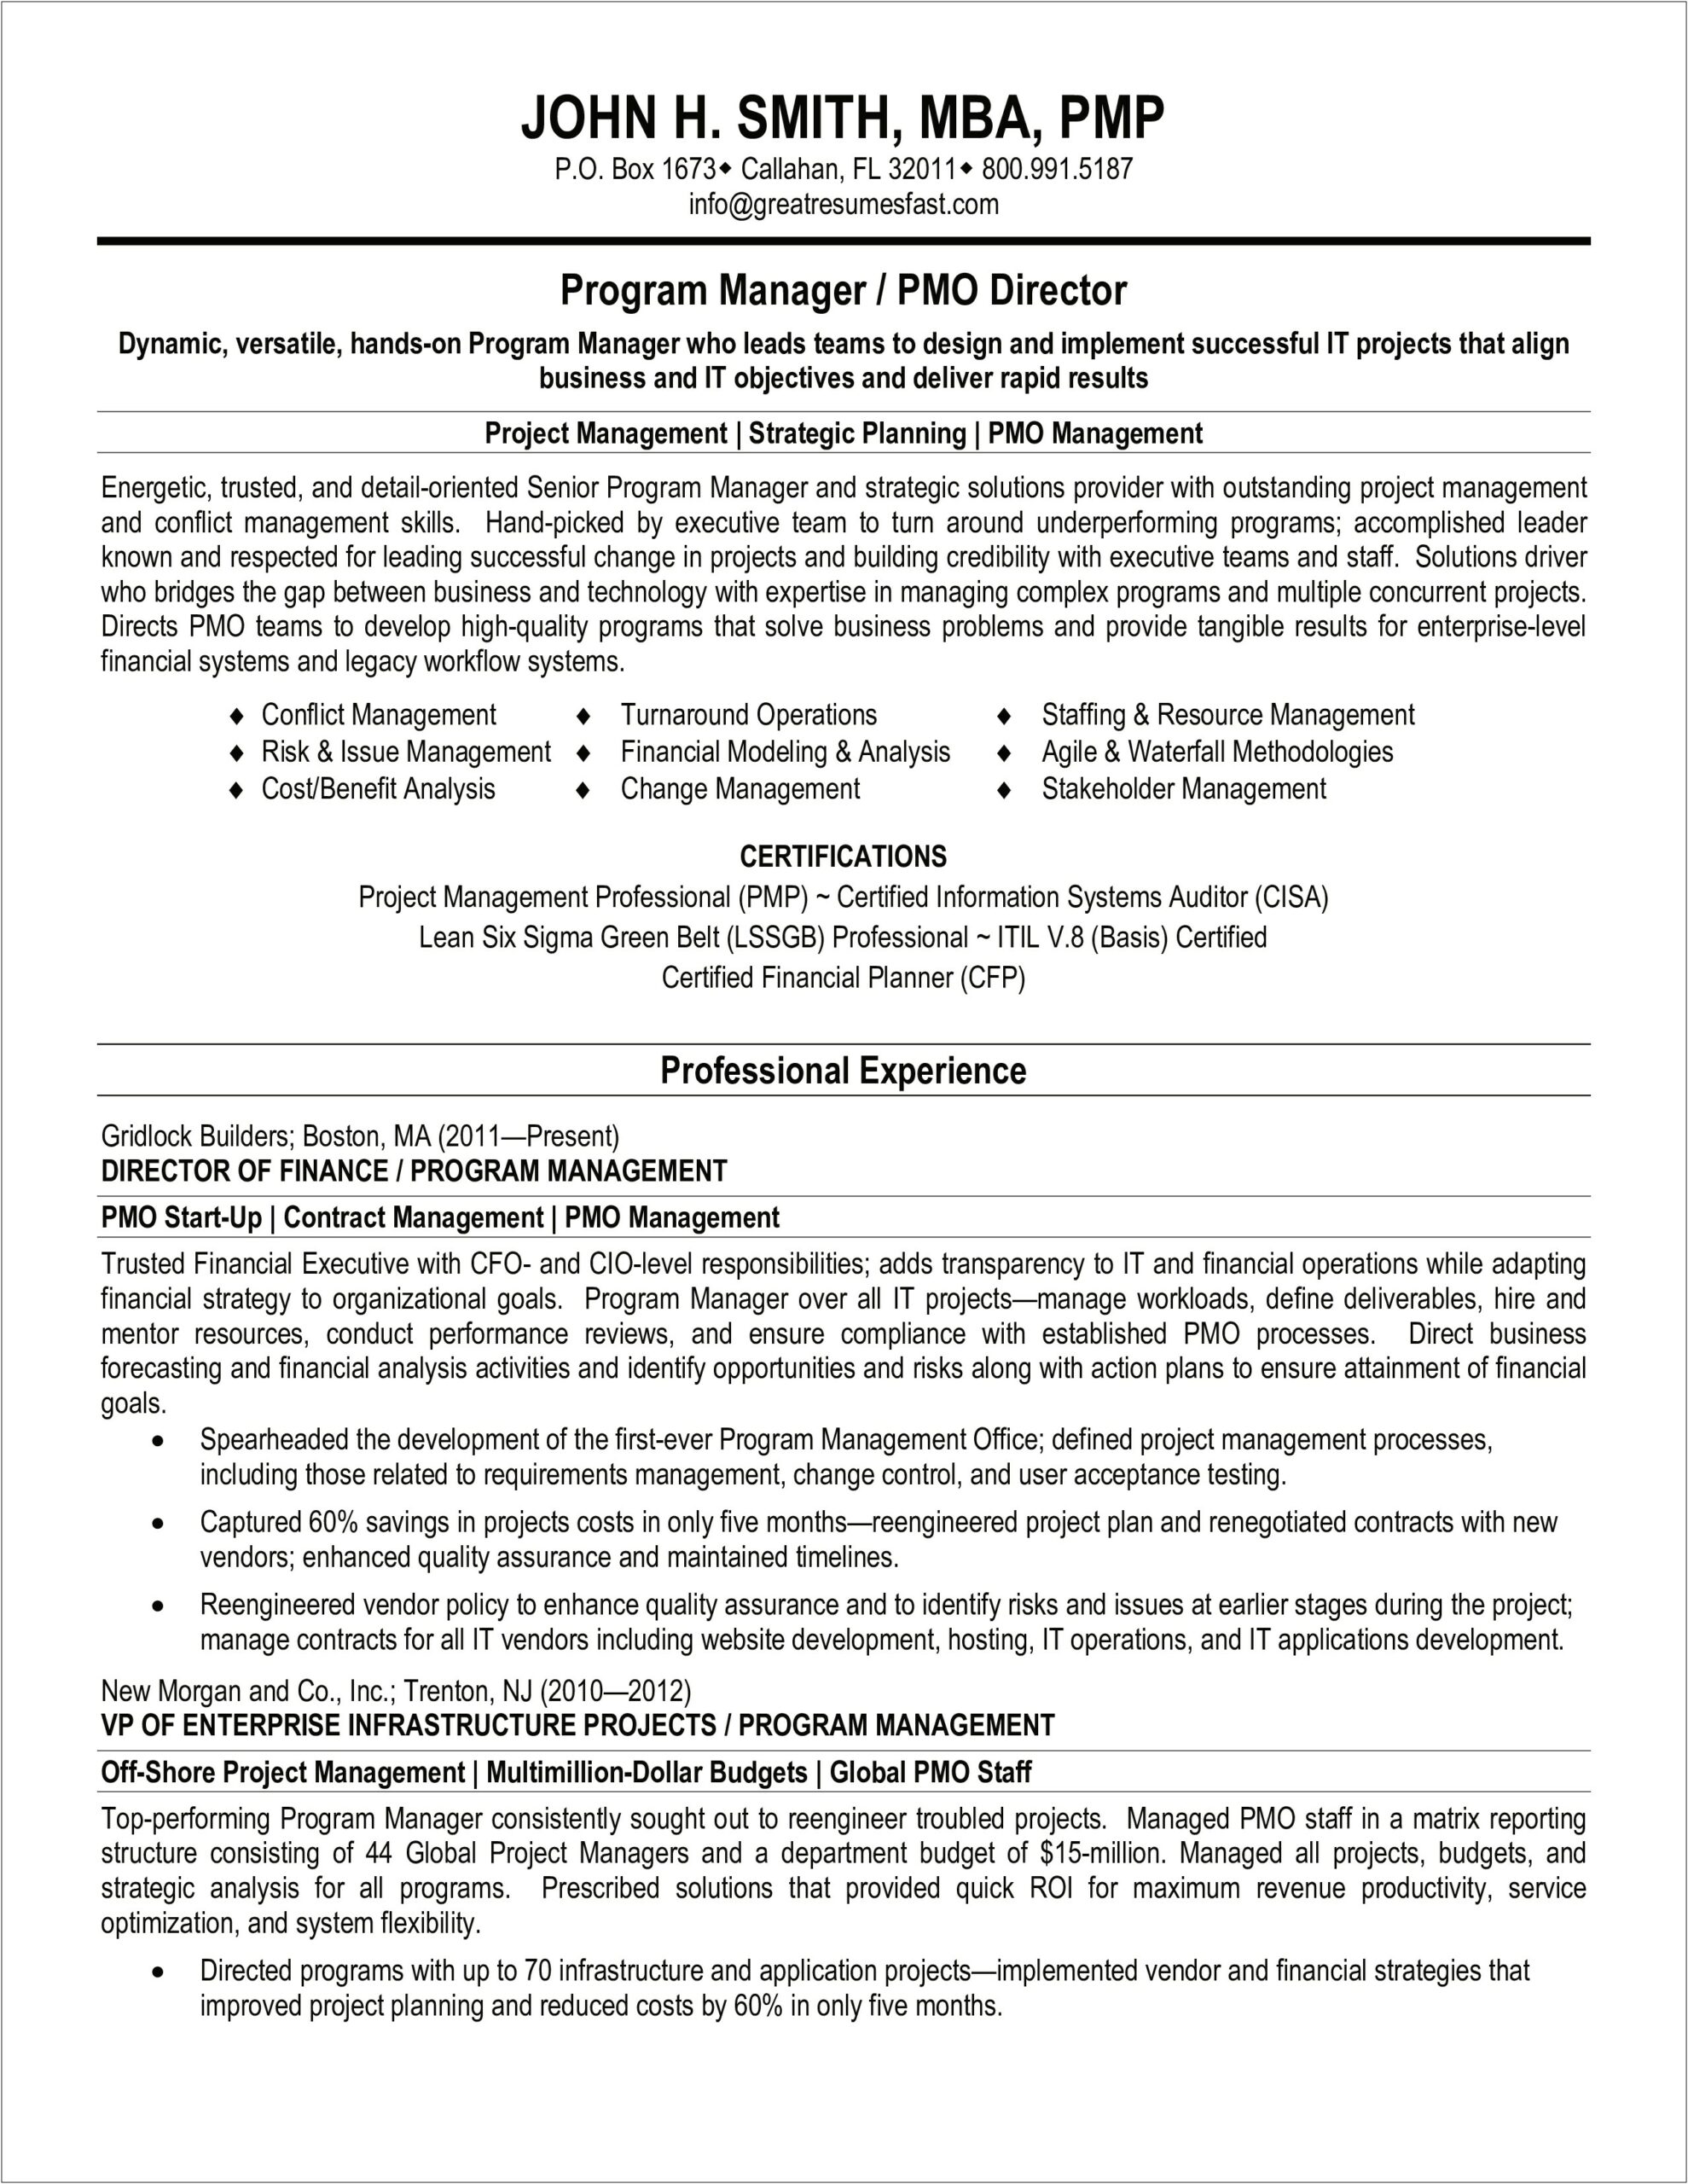 Sample Program Manager Resume Pdf